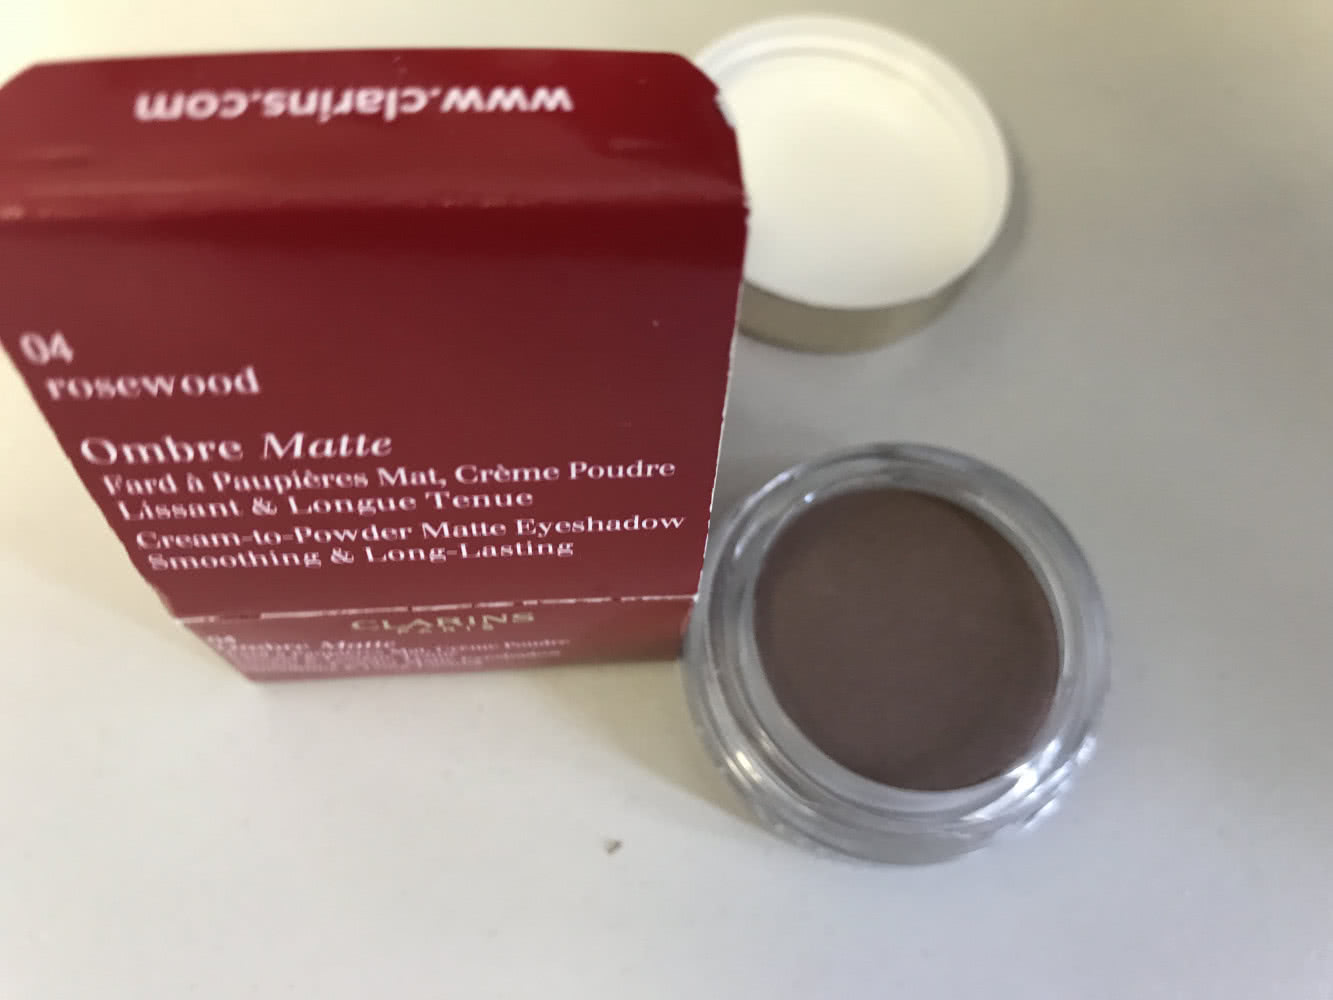 Clarins Ombre Matte Cream-To-Powder Matt Eyeshadow Smoothing & Long-Lasting 04 Rosewood